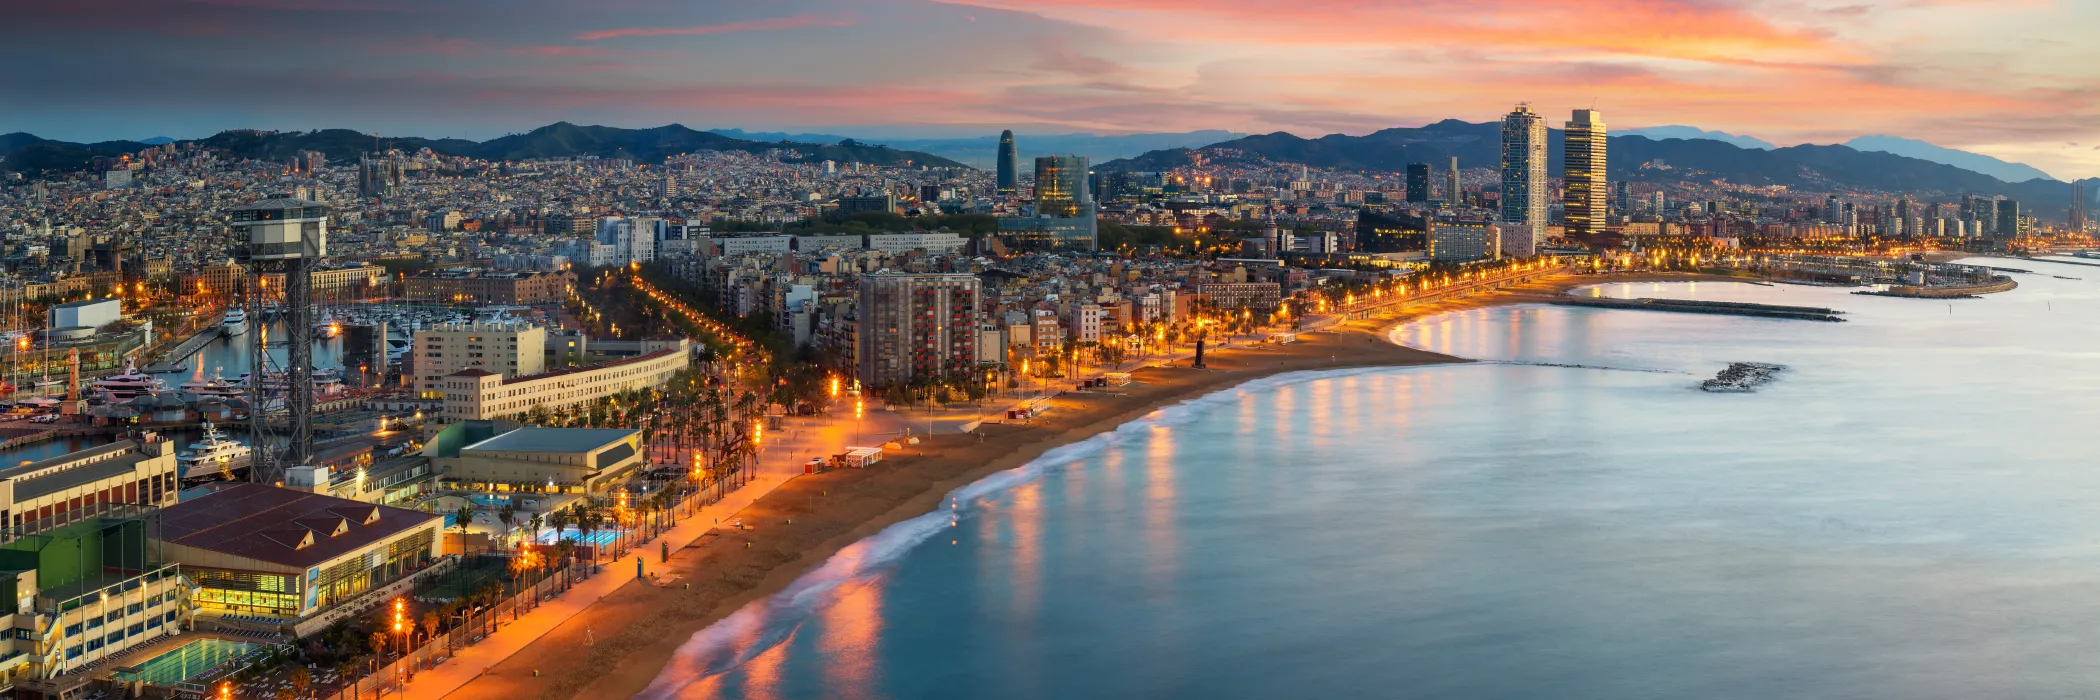 Beach City Breaks In The Sun - Barcelona